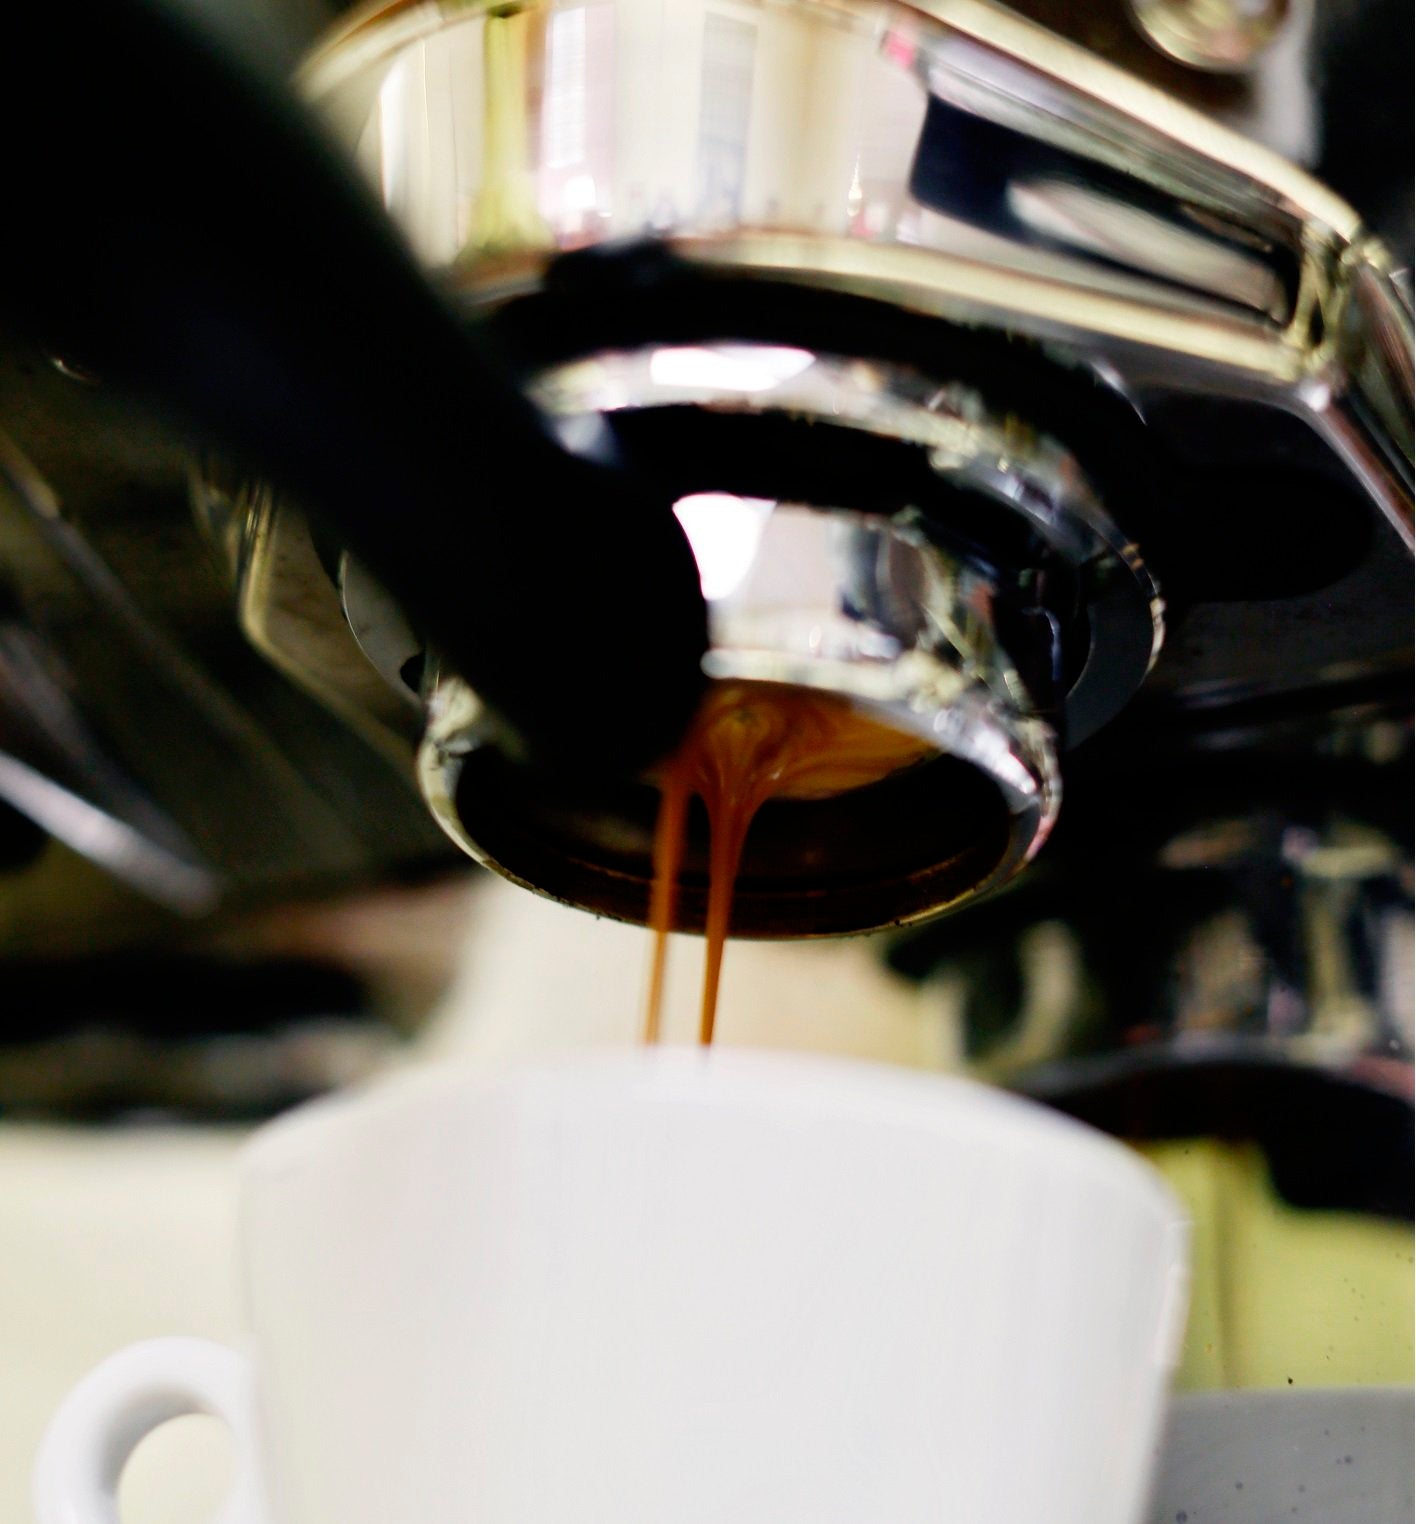 STORE - STRATA COFFEE ROASTING